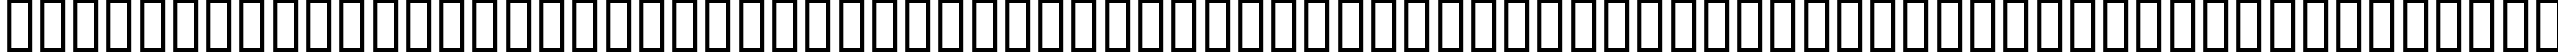 Пример написания английского алфавита шрифтом BD BillDing